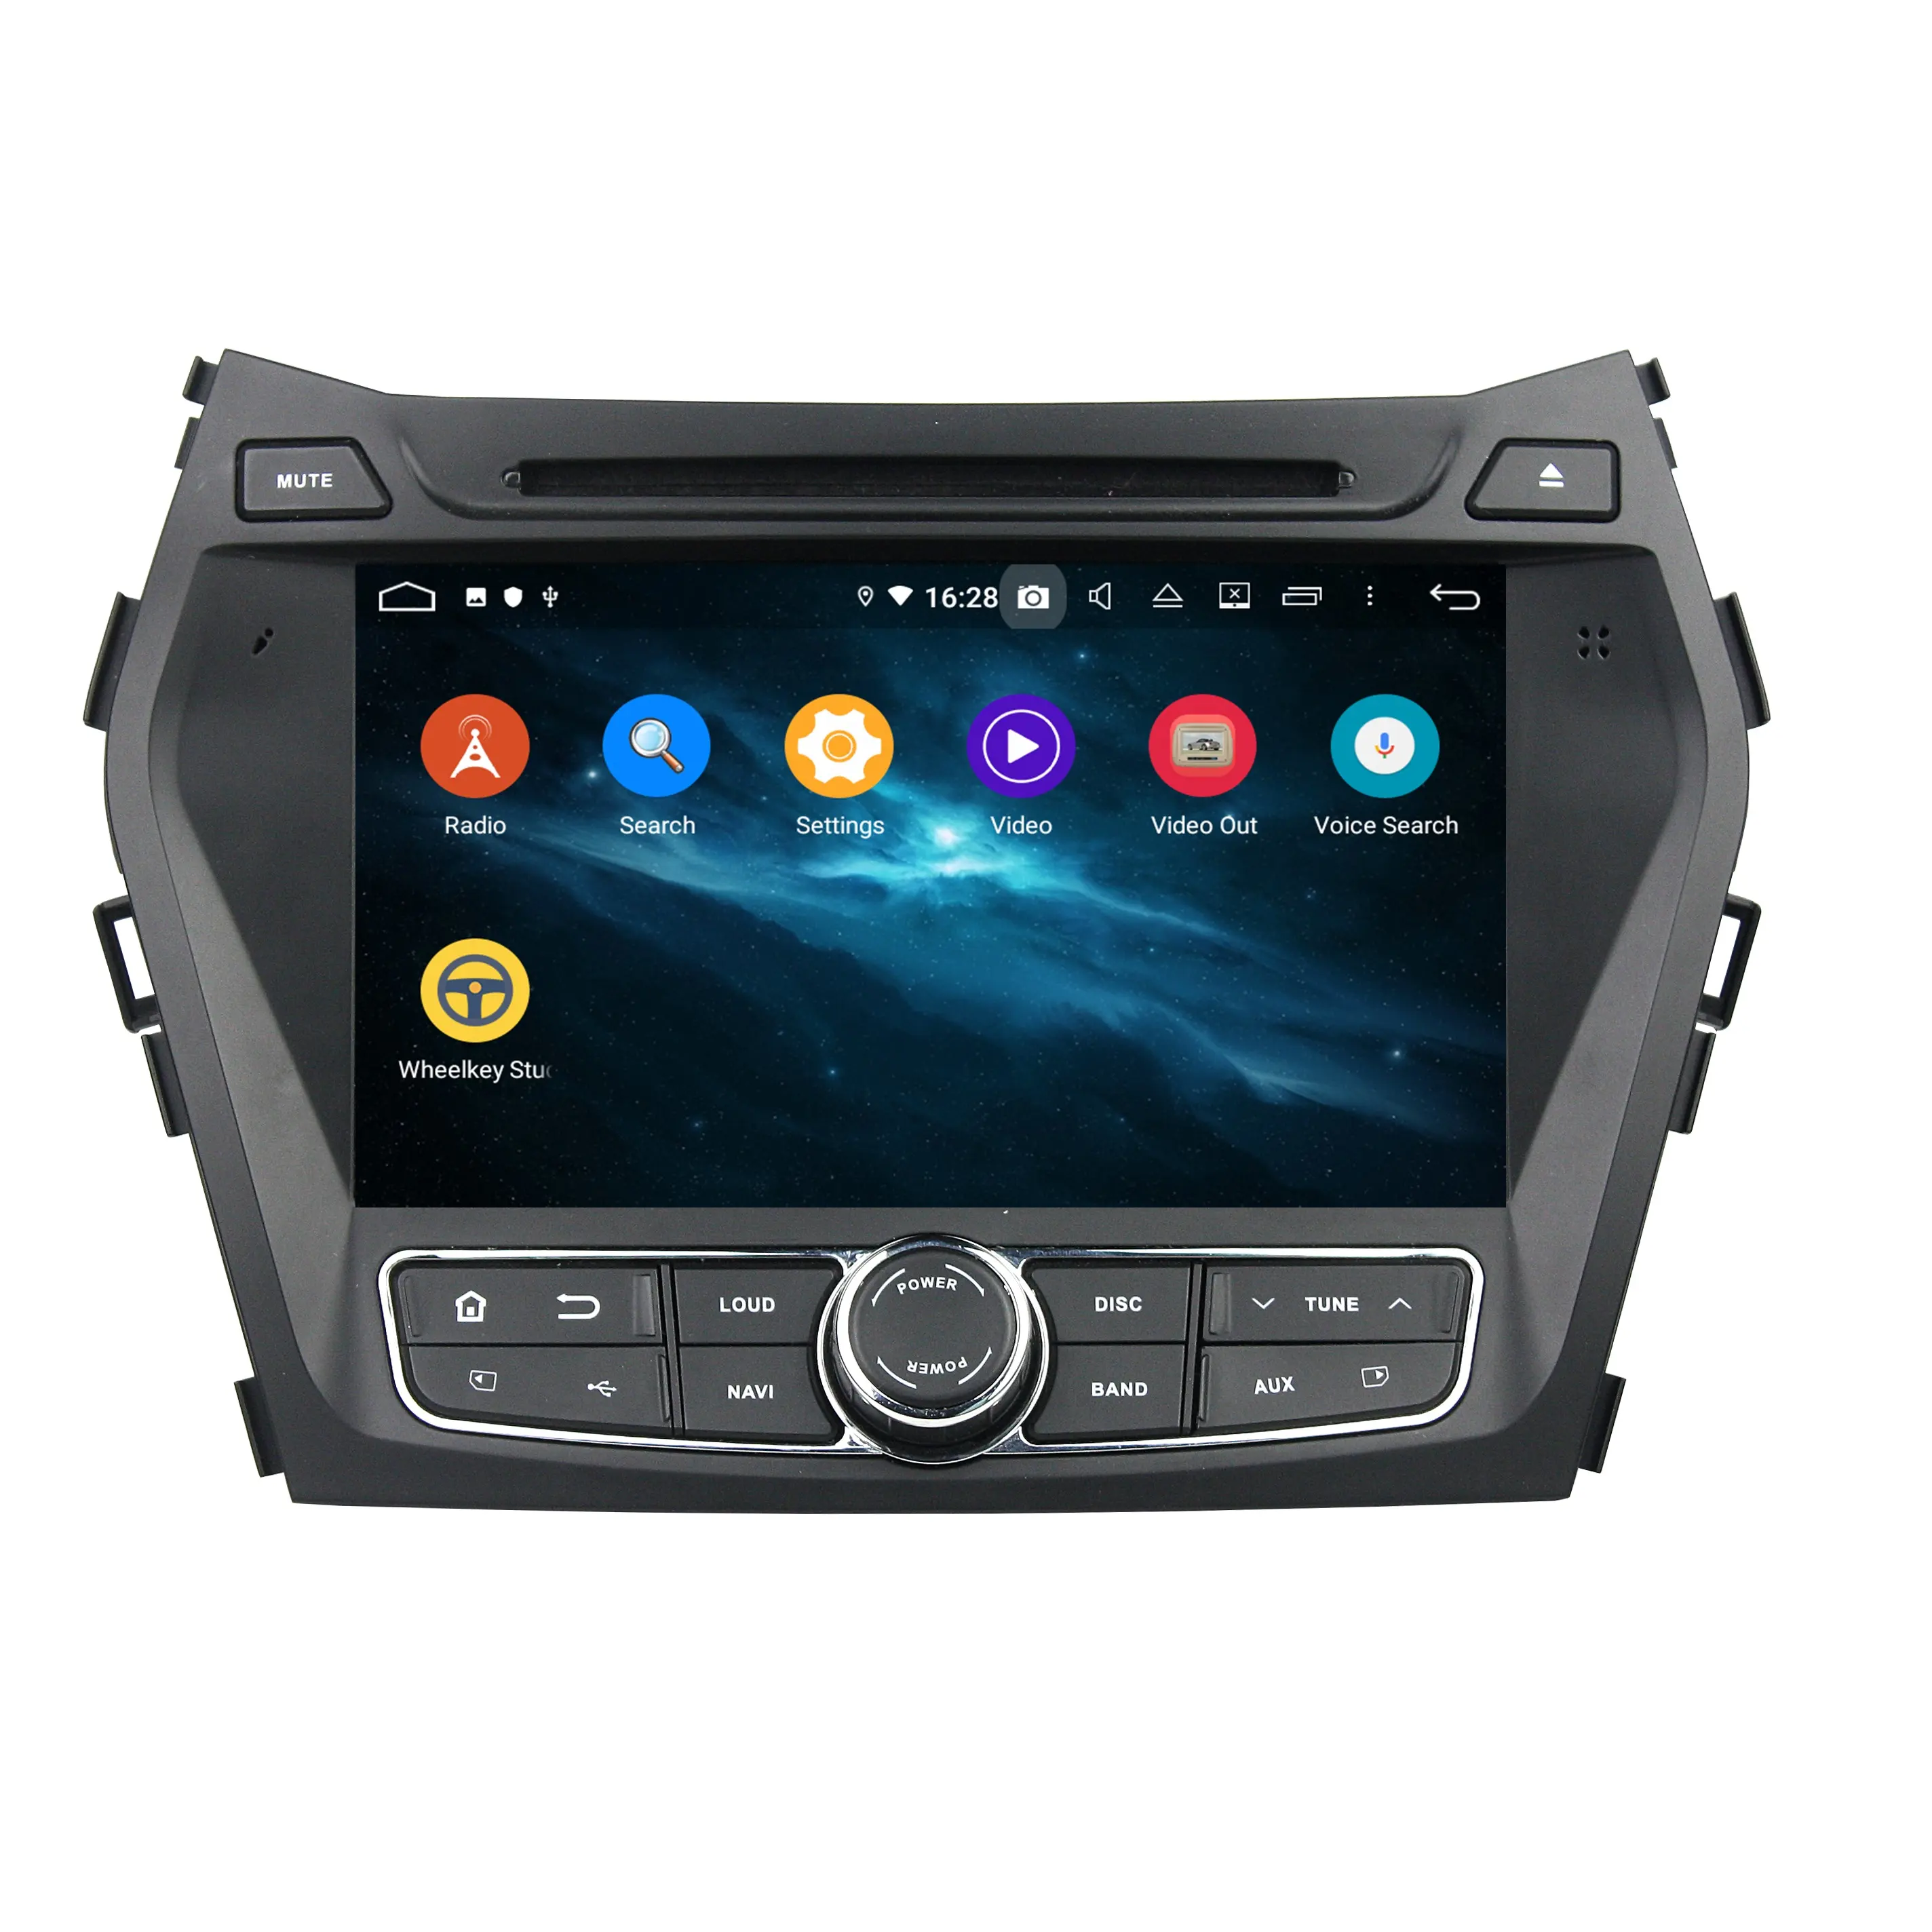 KD-8056 رئيس وحدة 8 بوصة تعمل باللمس Android10 أدوات إلكترونية للسيارات الوسائط المتعددة راديو فيديو مشغل ديفيدي ل IX45/سانتا في 2014 Carplay